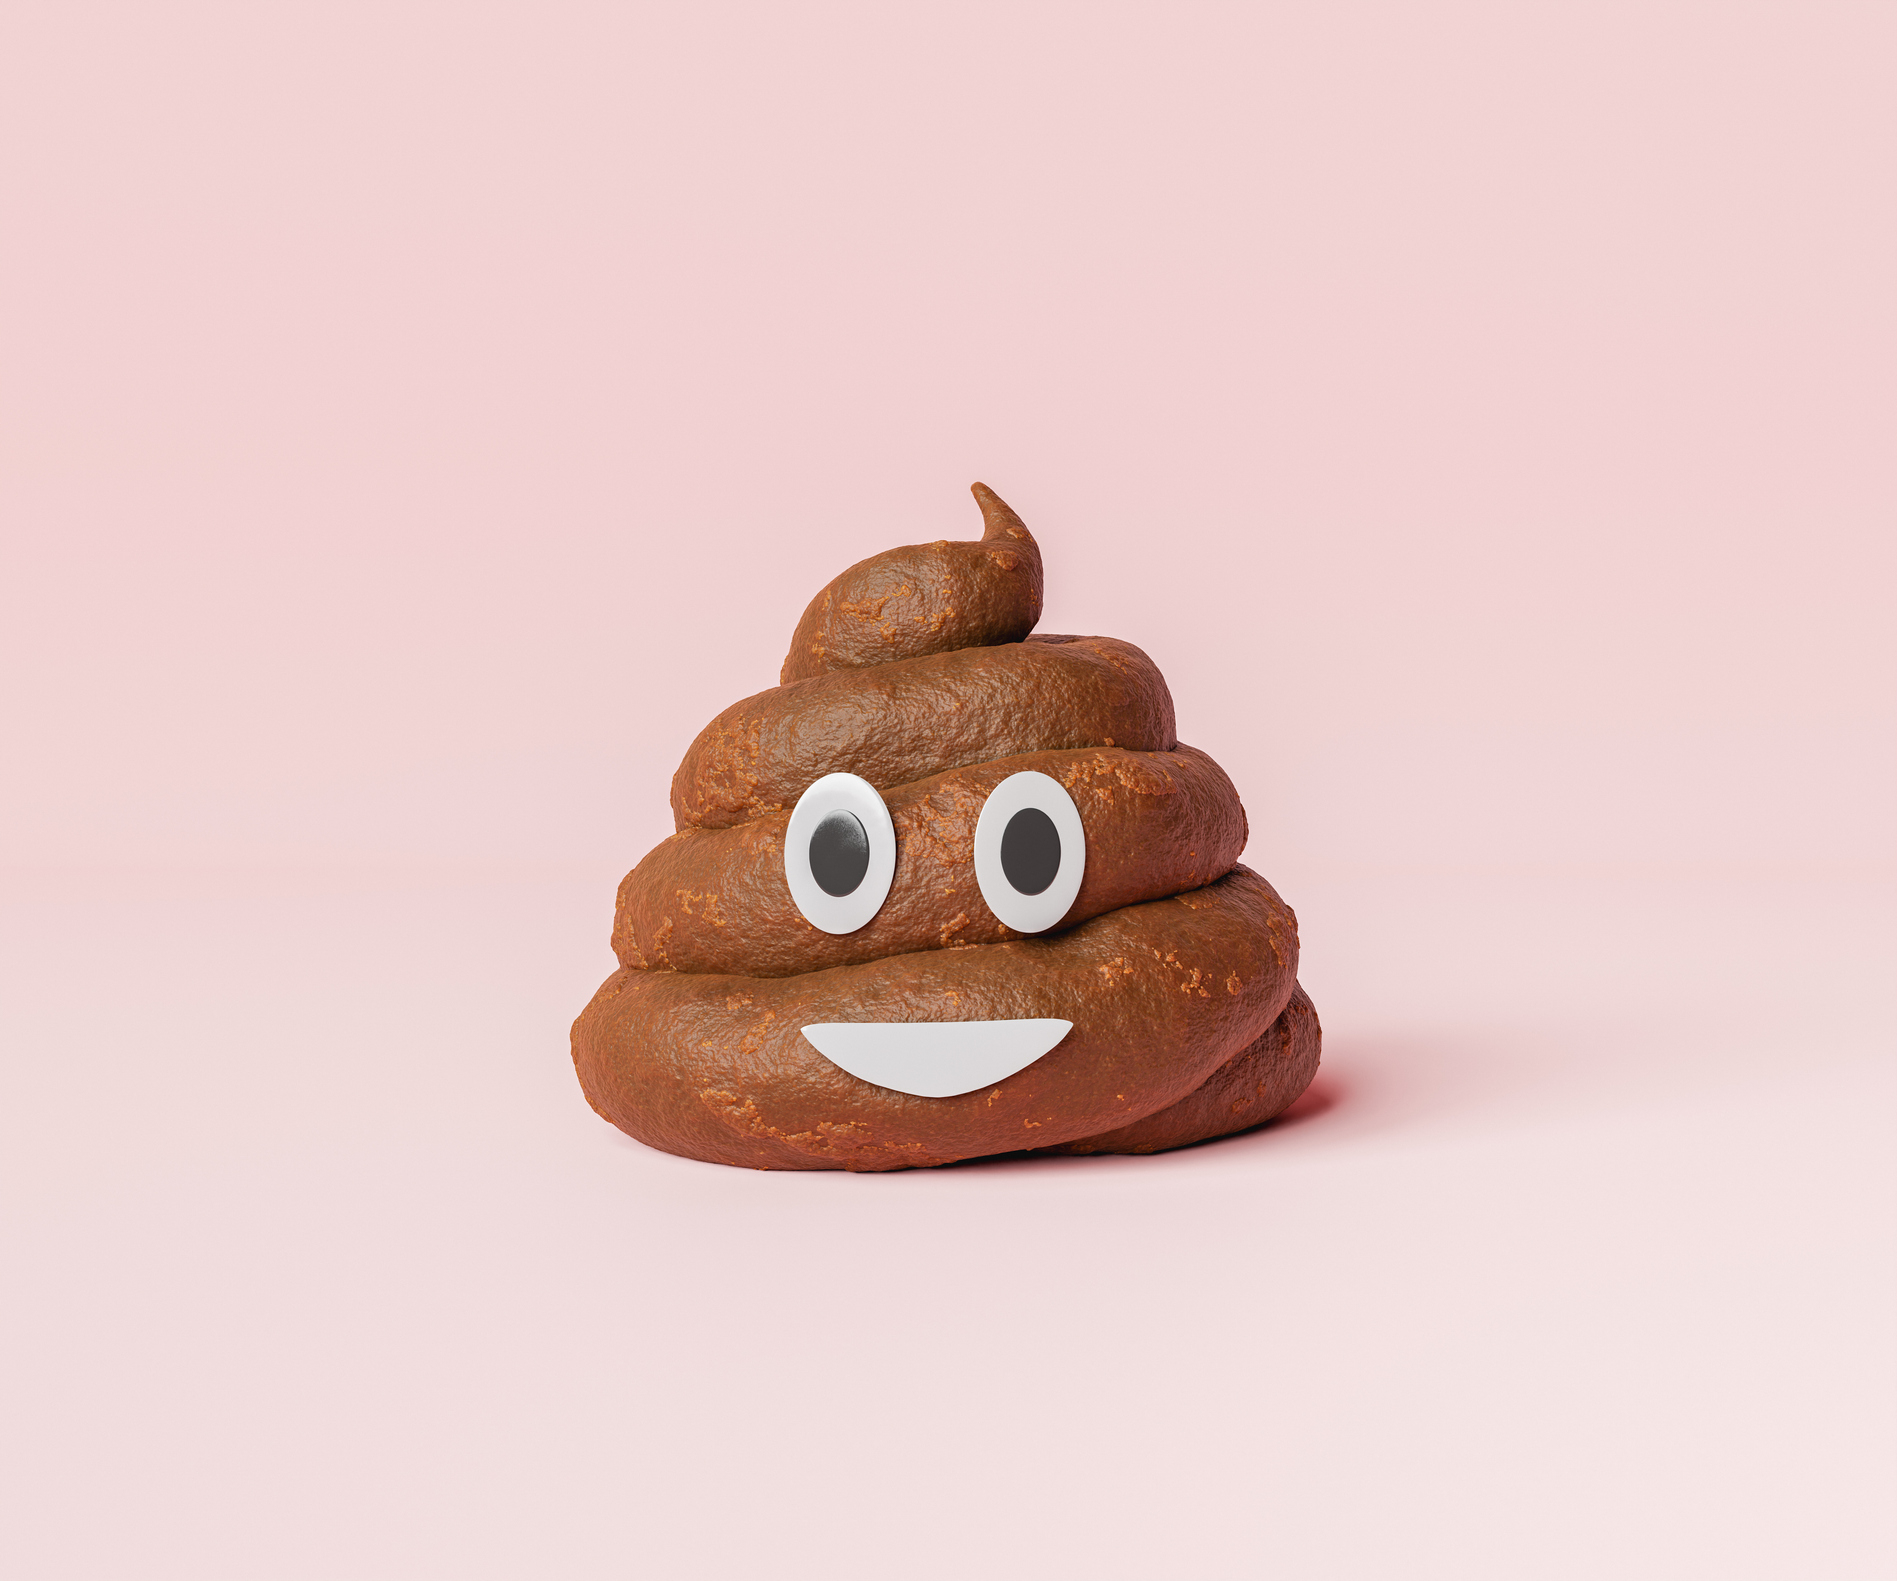 A smiling poop emoji figure against a plain background